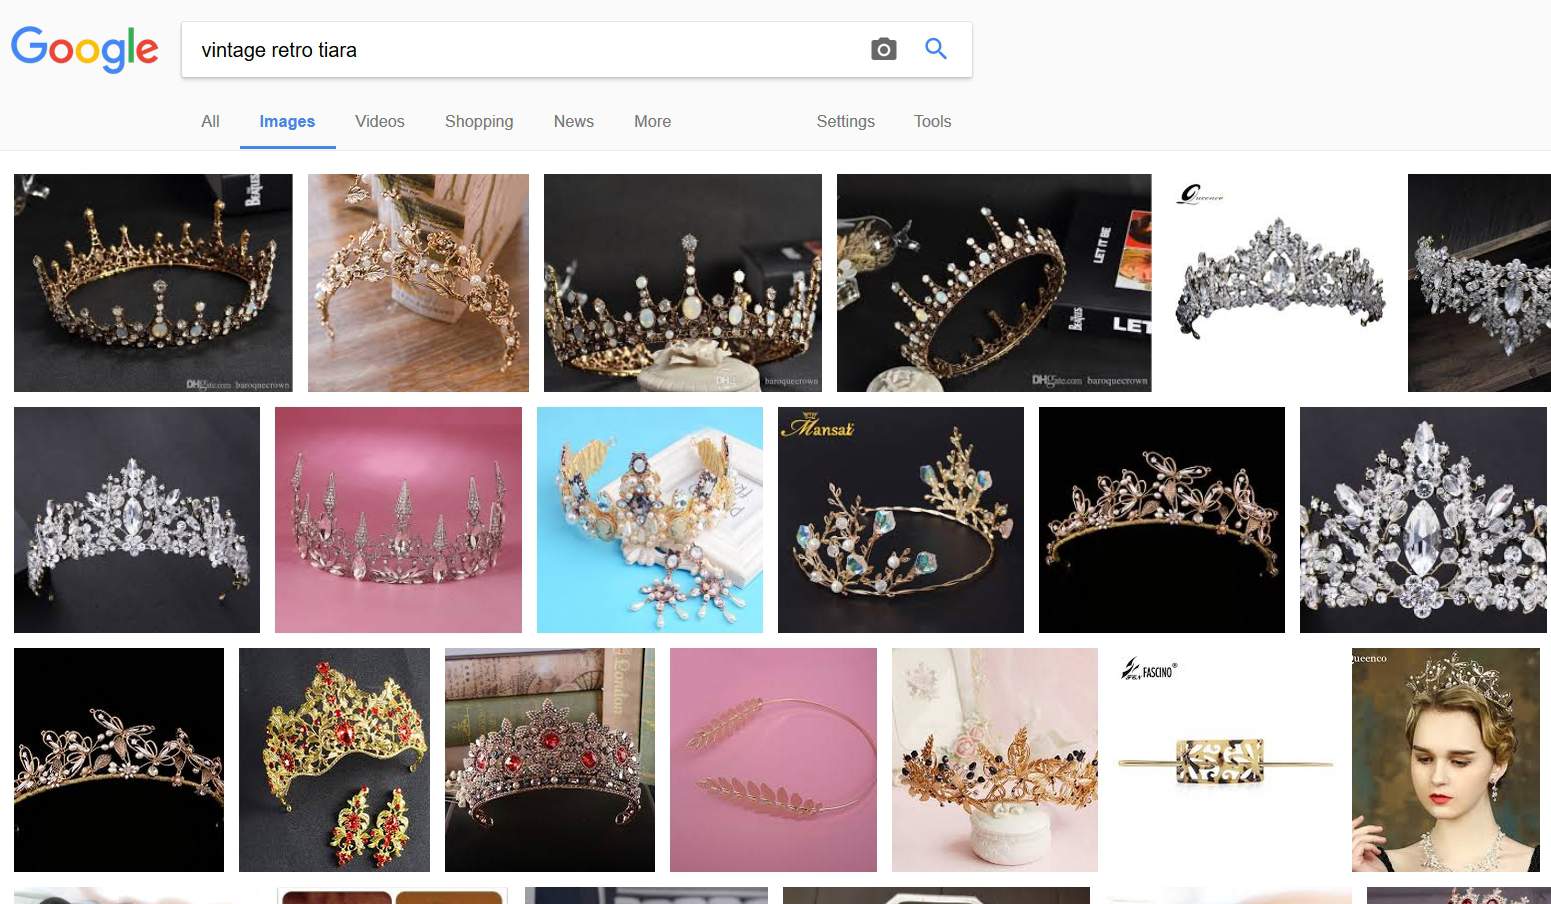 vintage retro tiara - Google Search